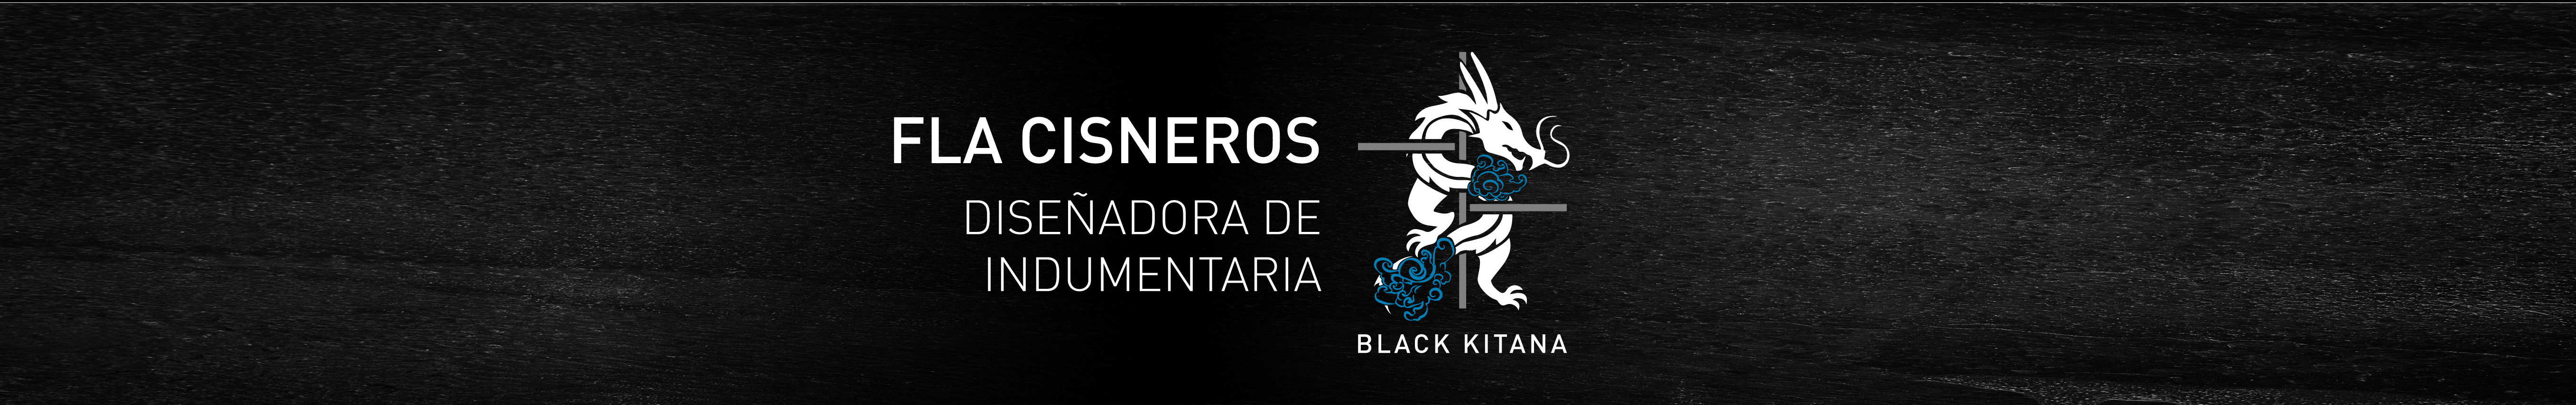 Fla Cisneros's profile banner